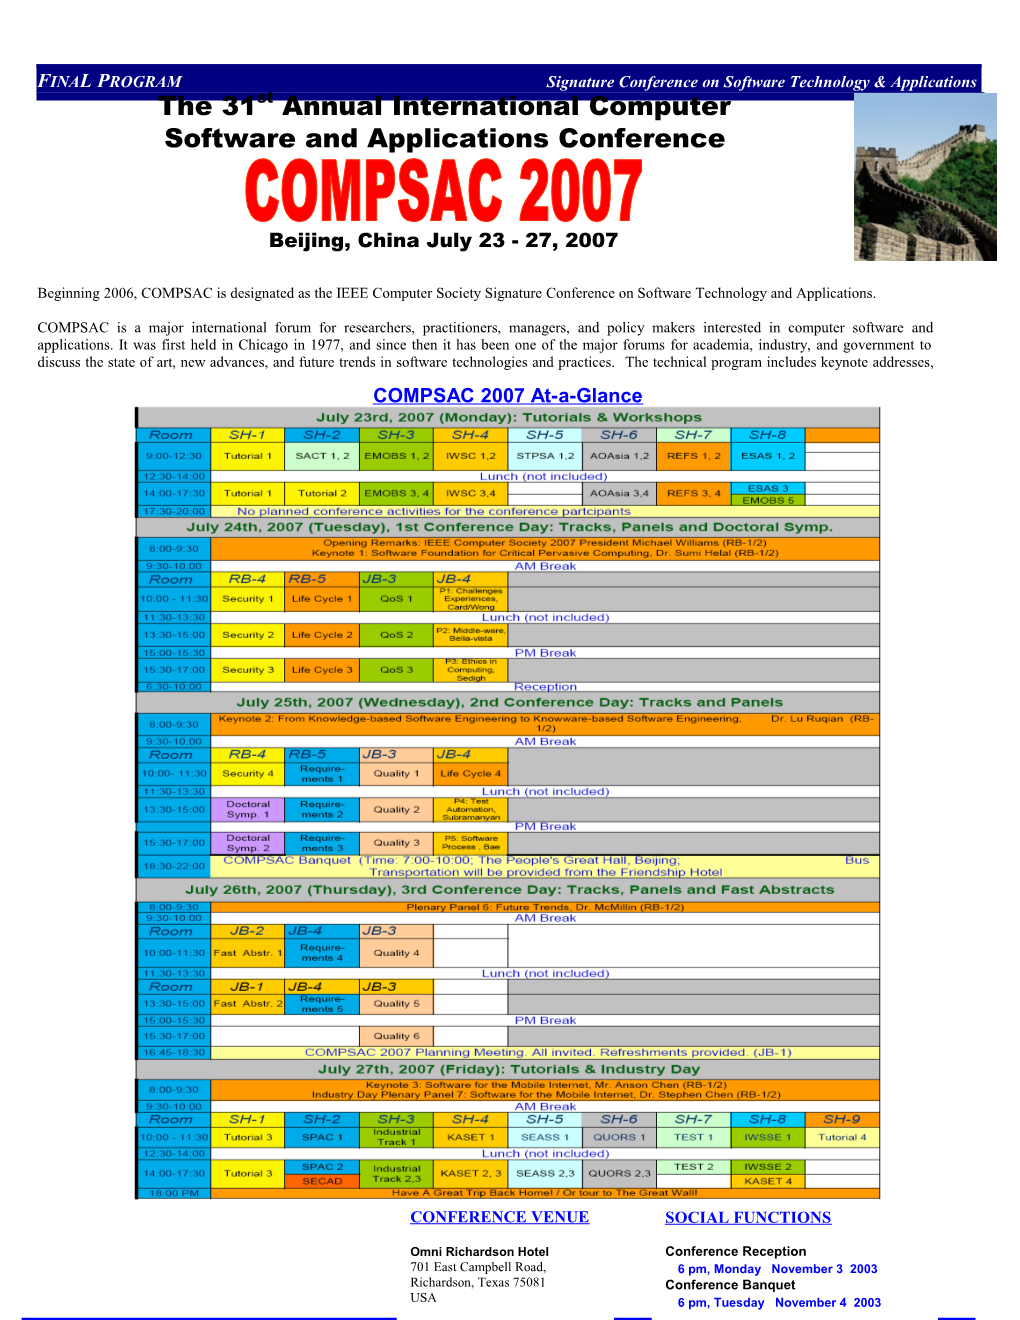 COMPSAC 2002 Technical Program